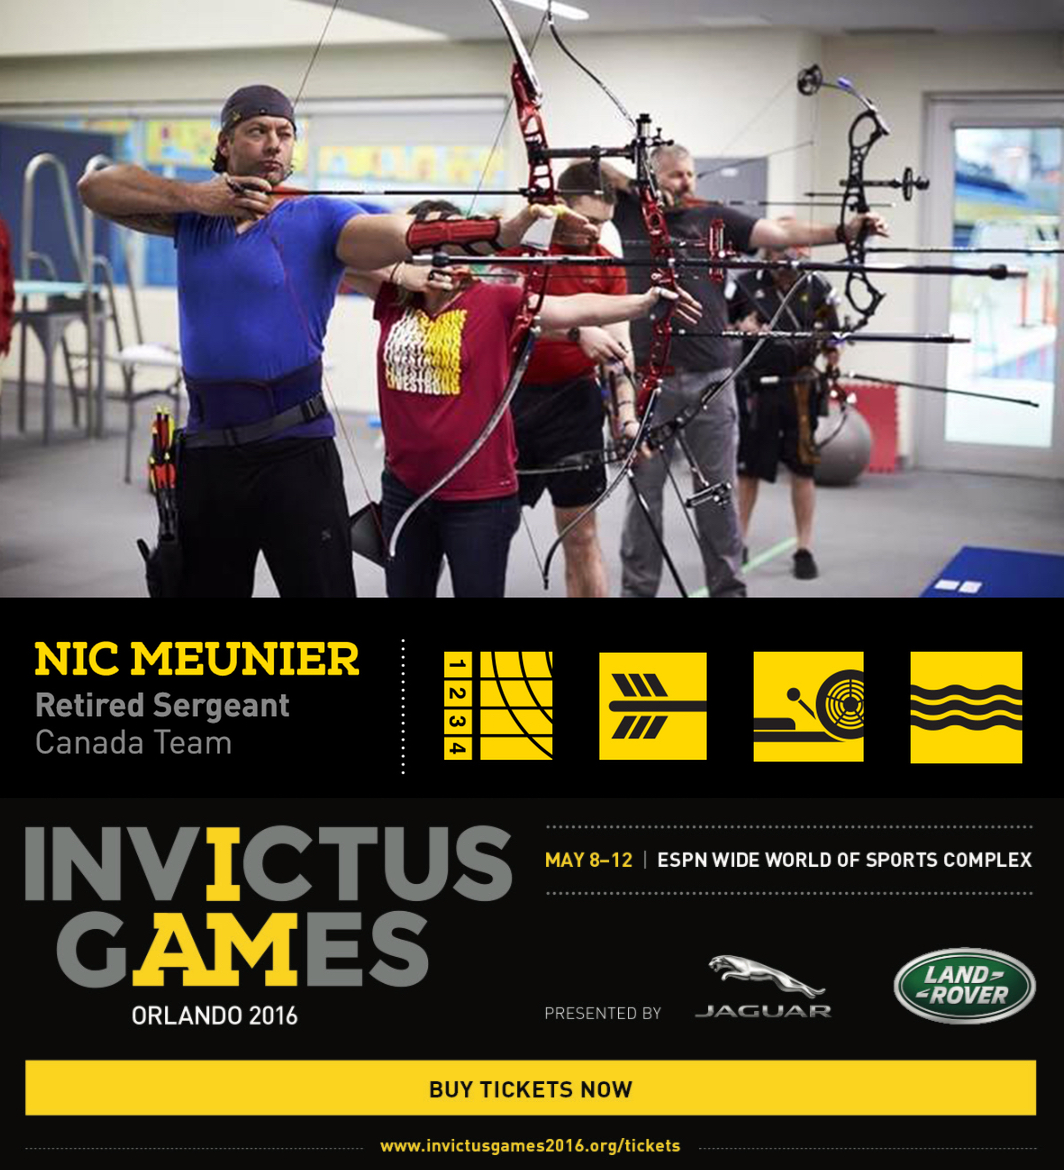 Nic Meunier and Invictus Games 2016